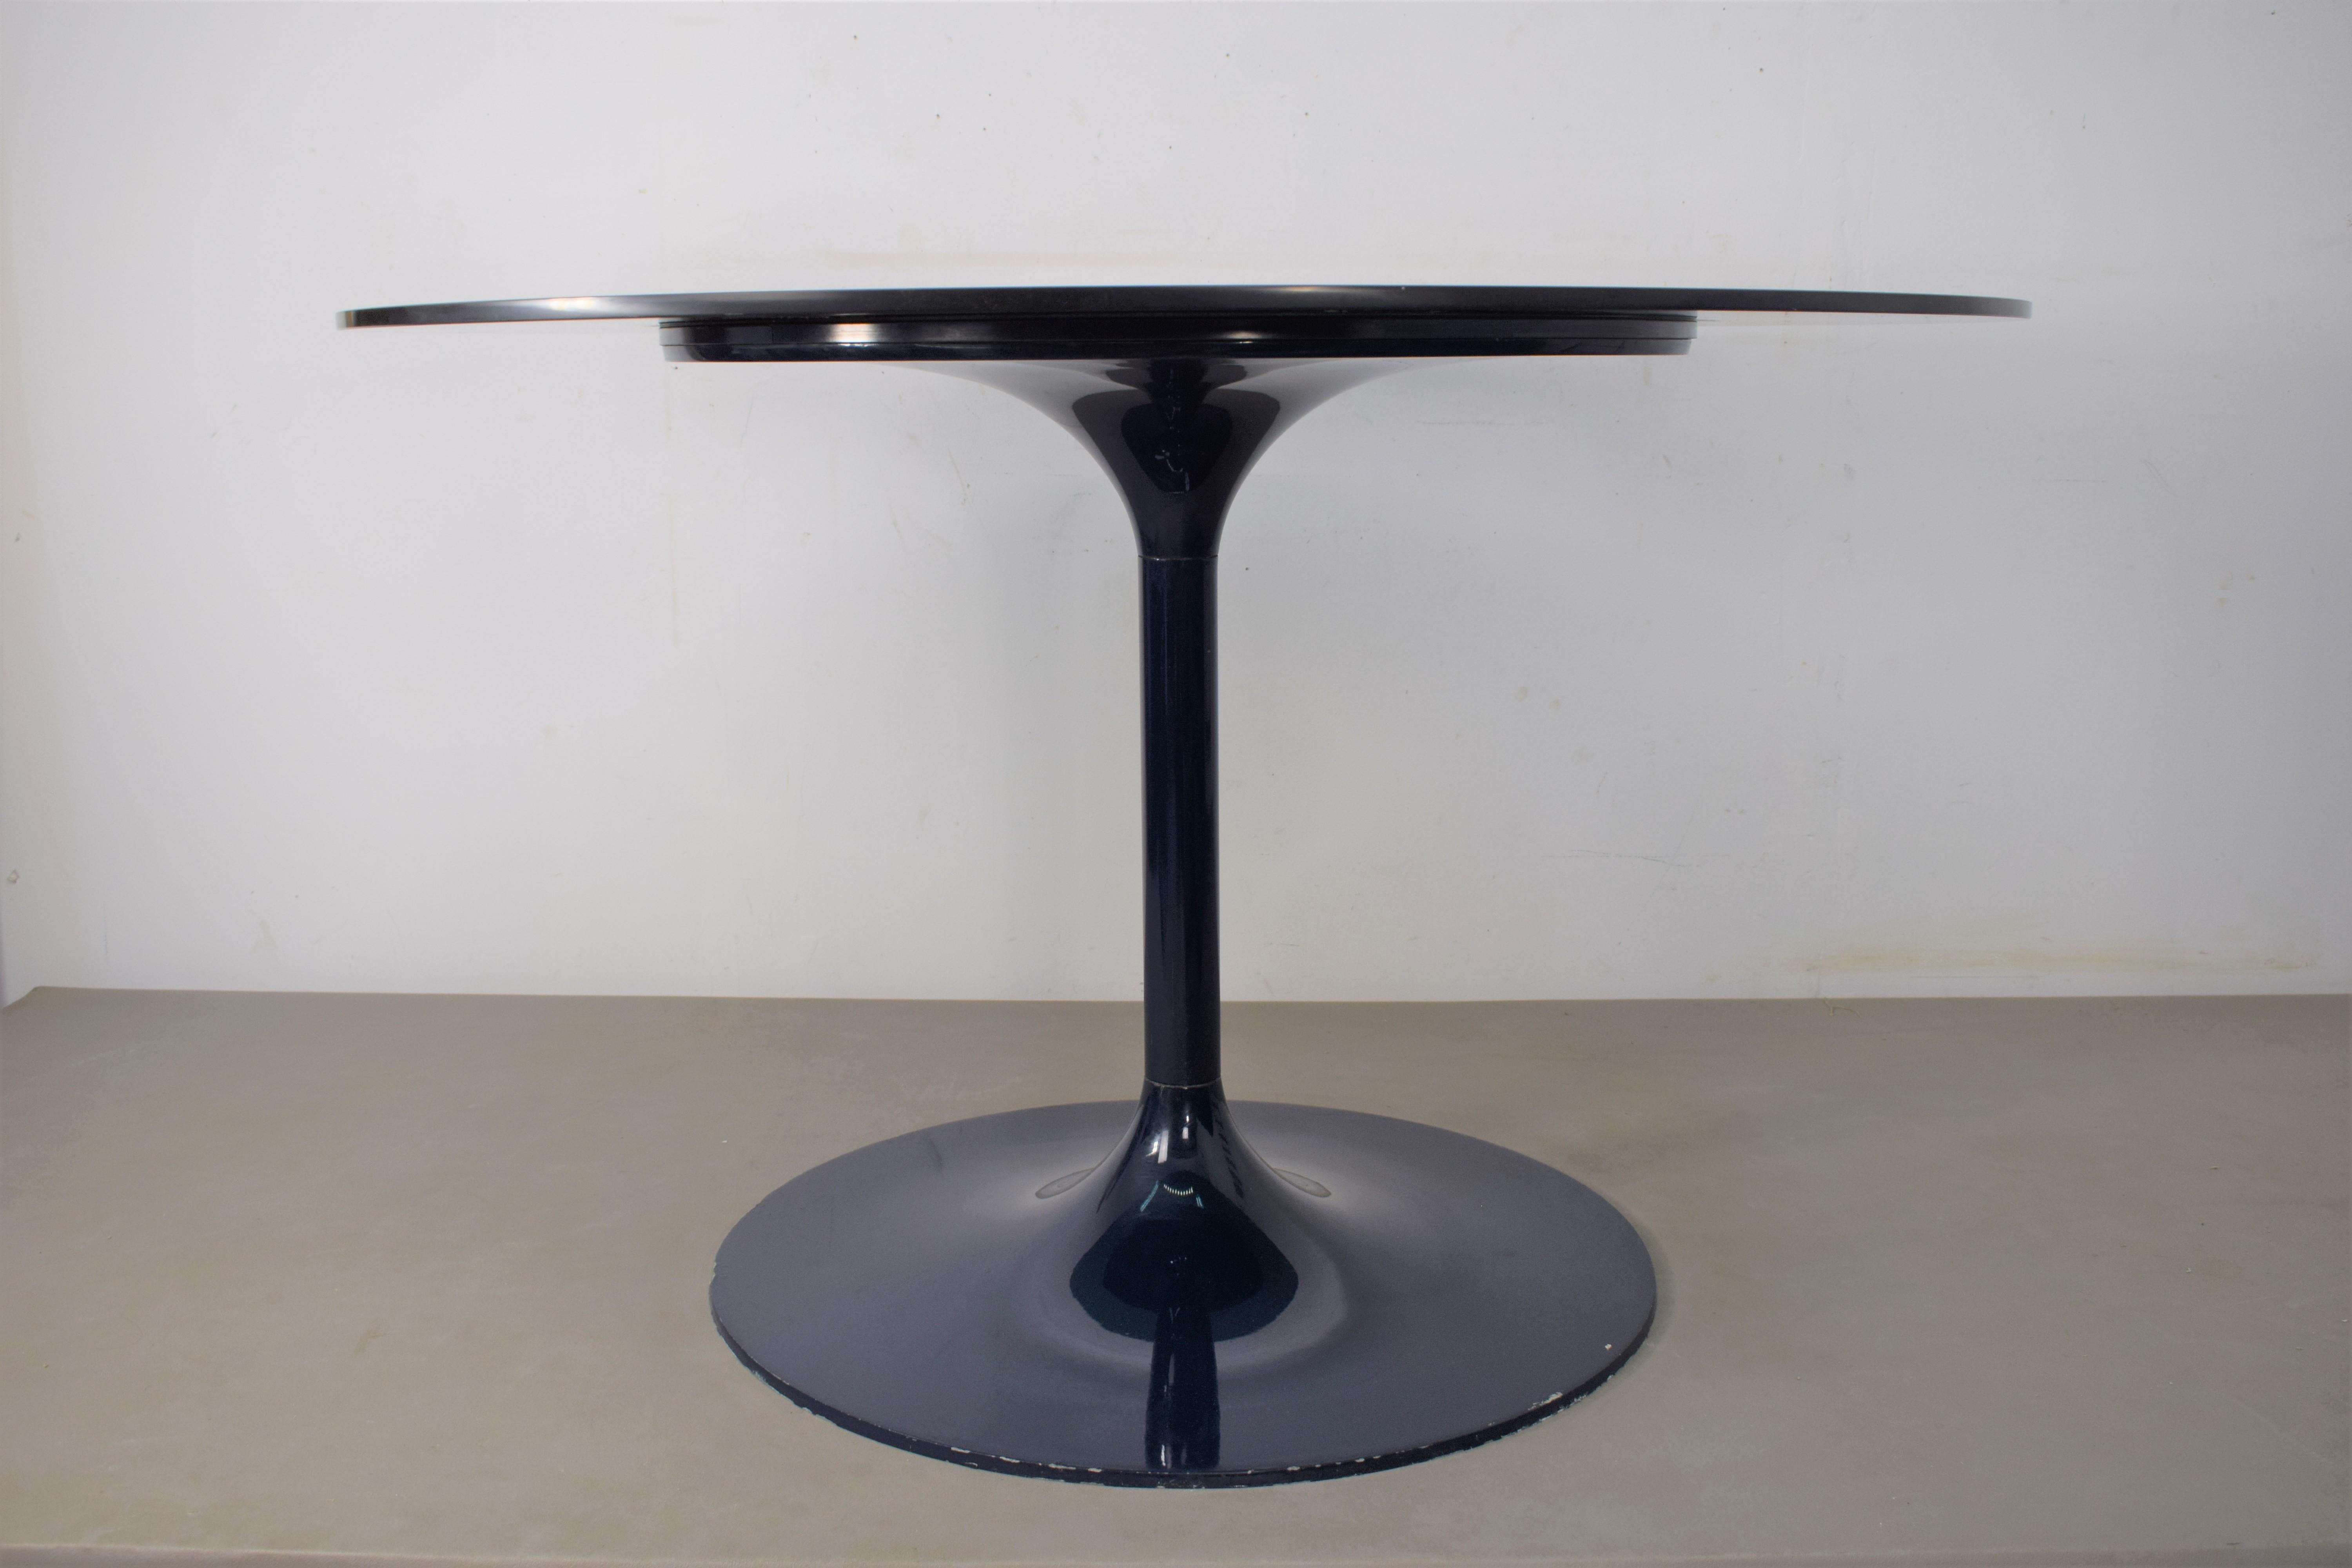 Italian round table, 1970s.
Dimensions: H= 75 cm; D=119 cm.